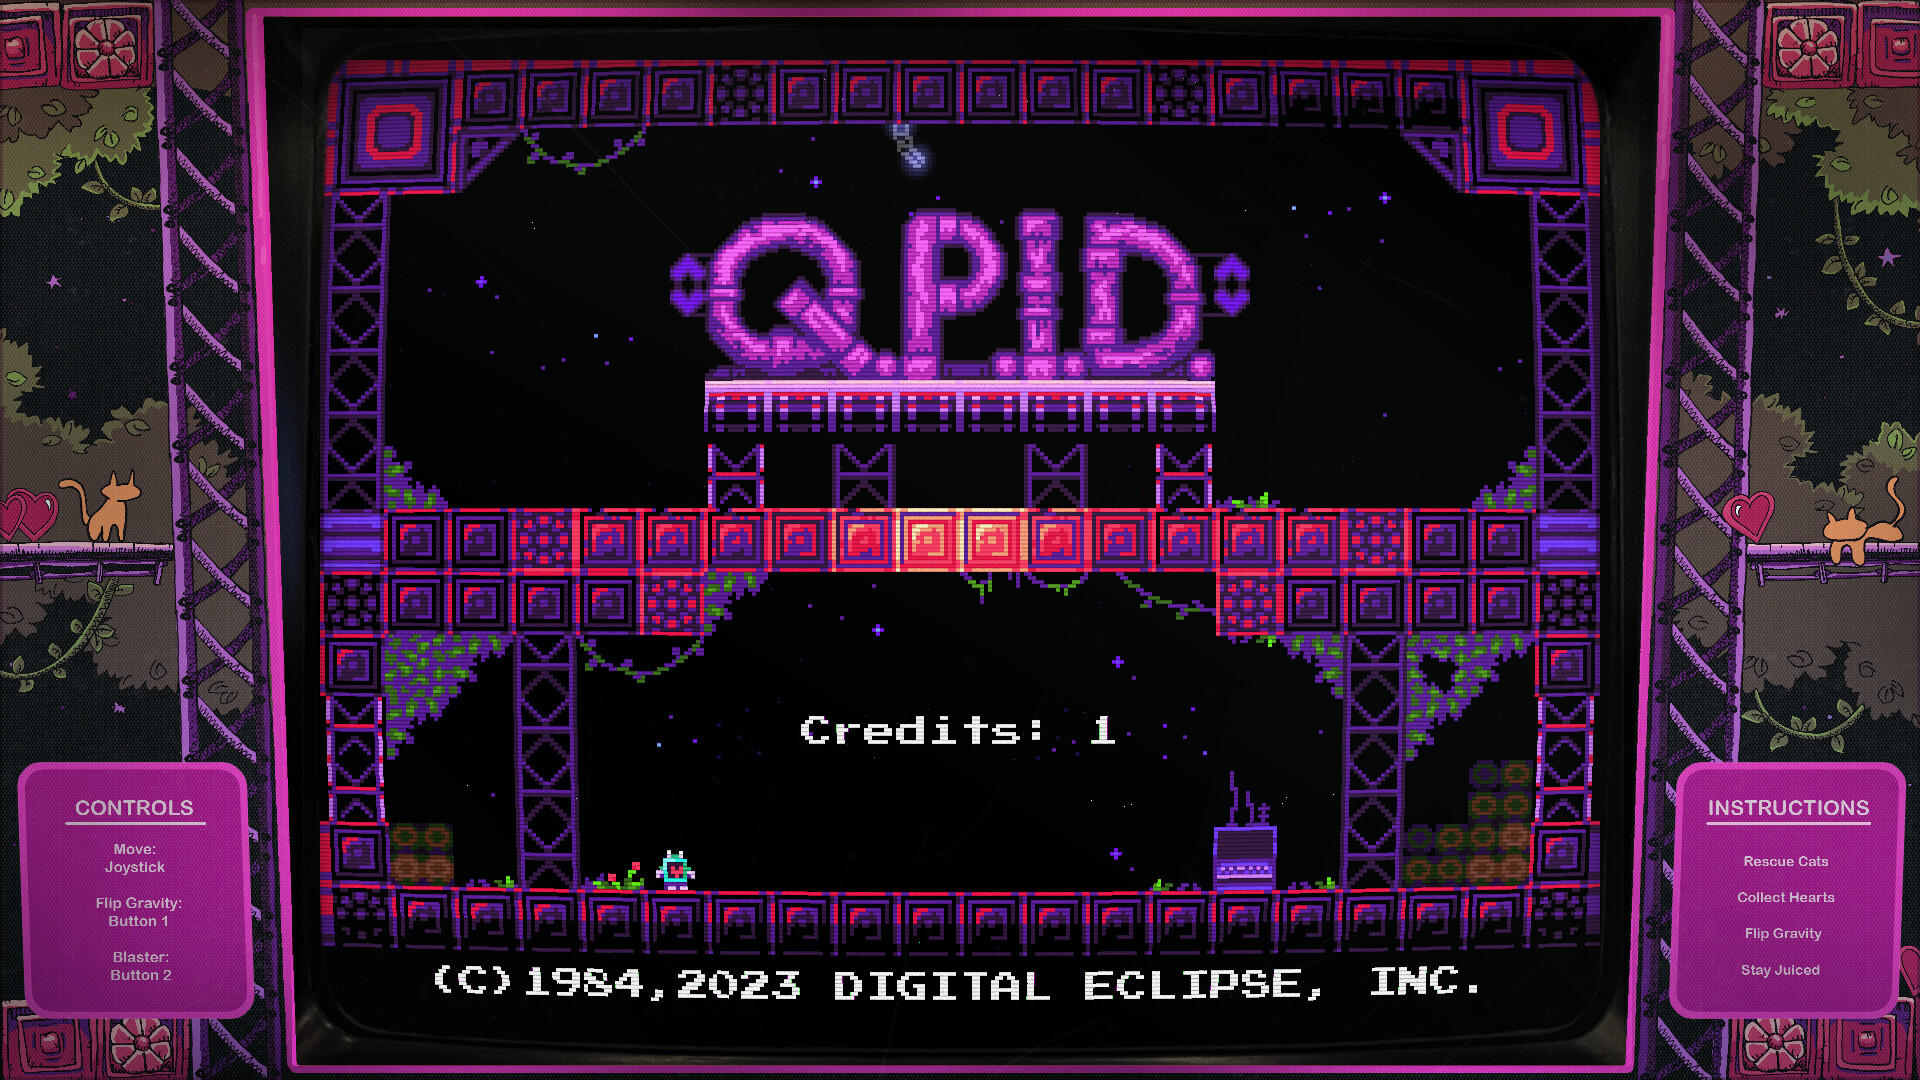 Screenshot 1 of 數位 Eclipse 街機：QPID 